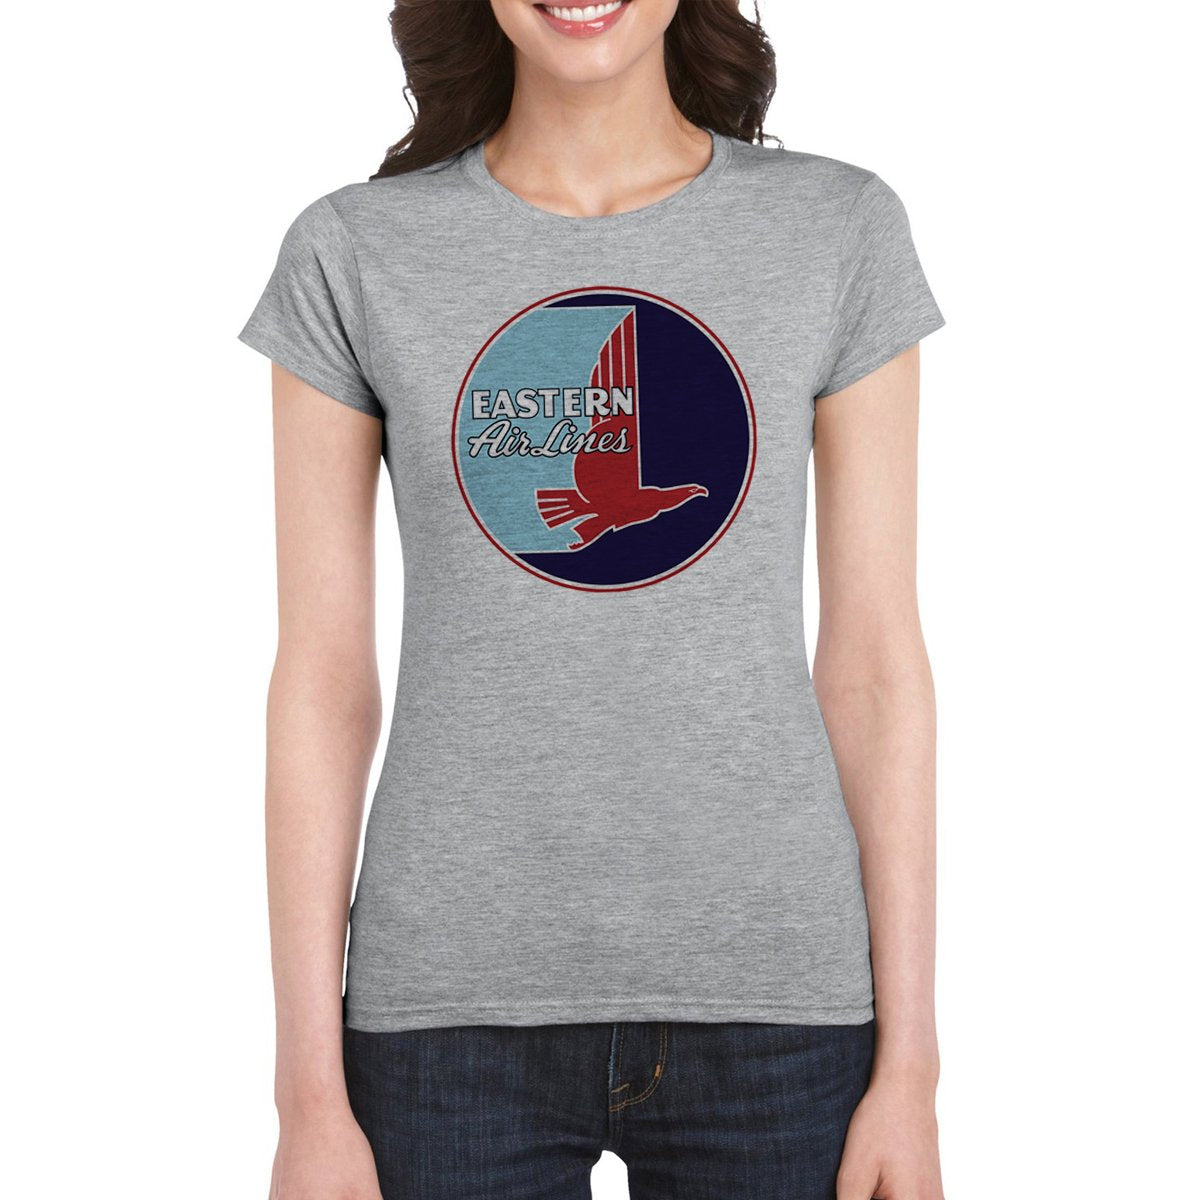 EASTERN AIRLINES LOGO Women's T-Shirt